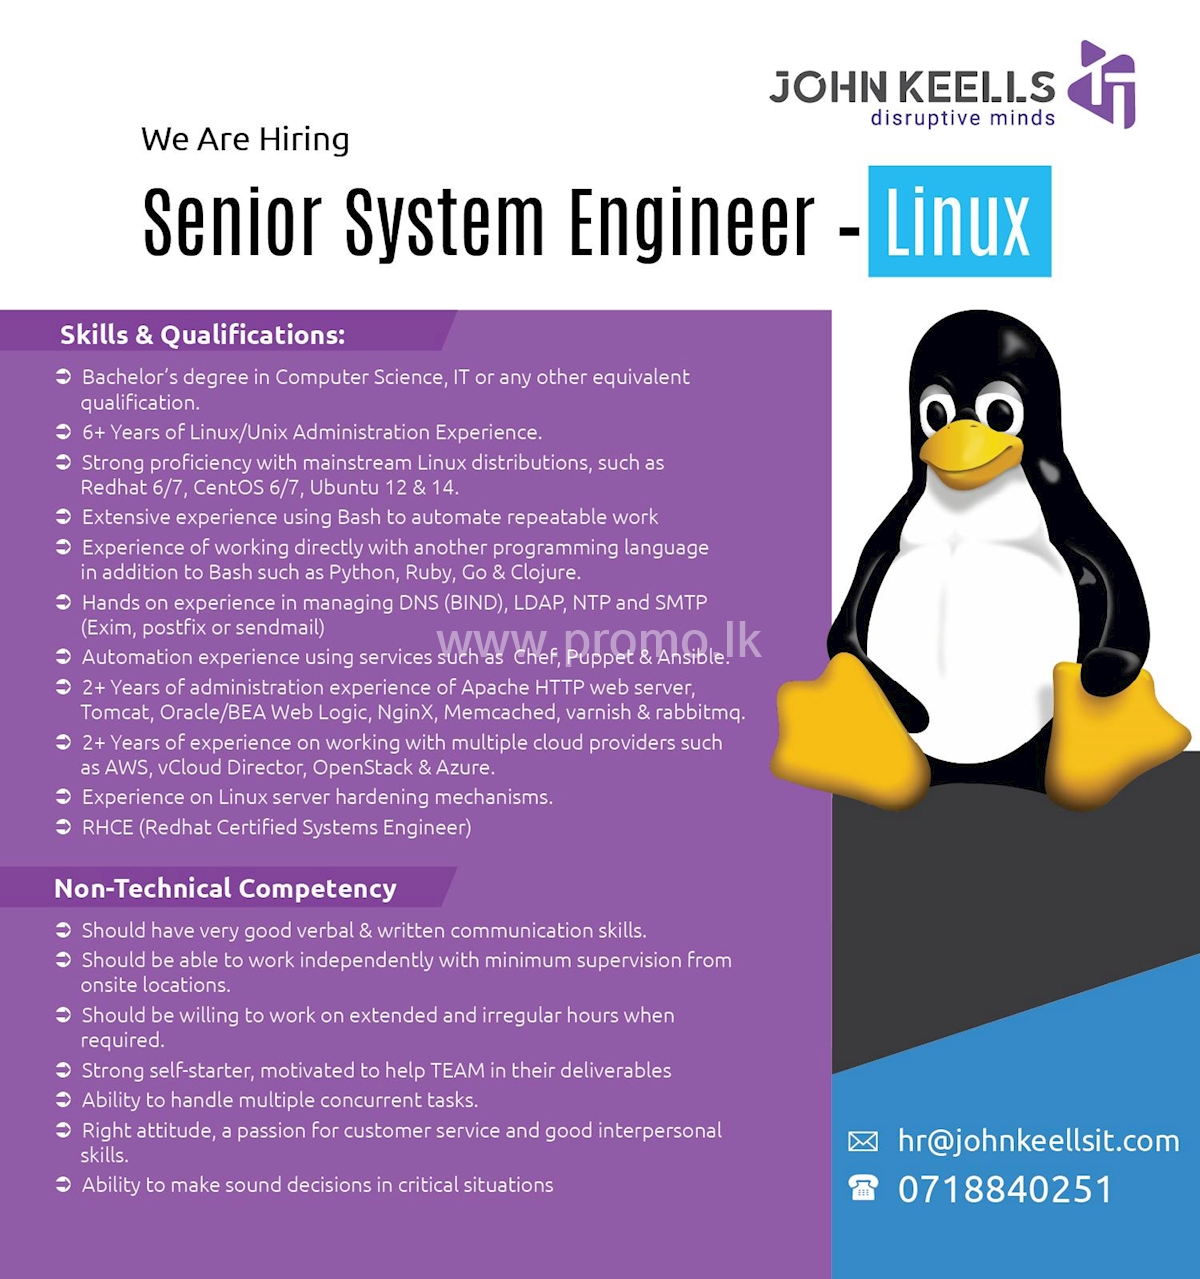 Senior System Engineer - Linux